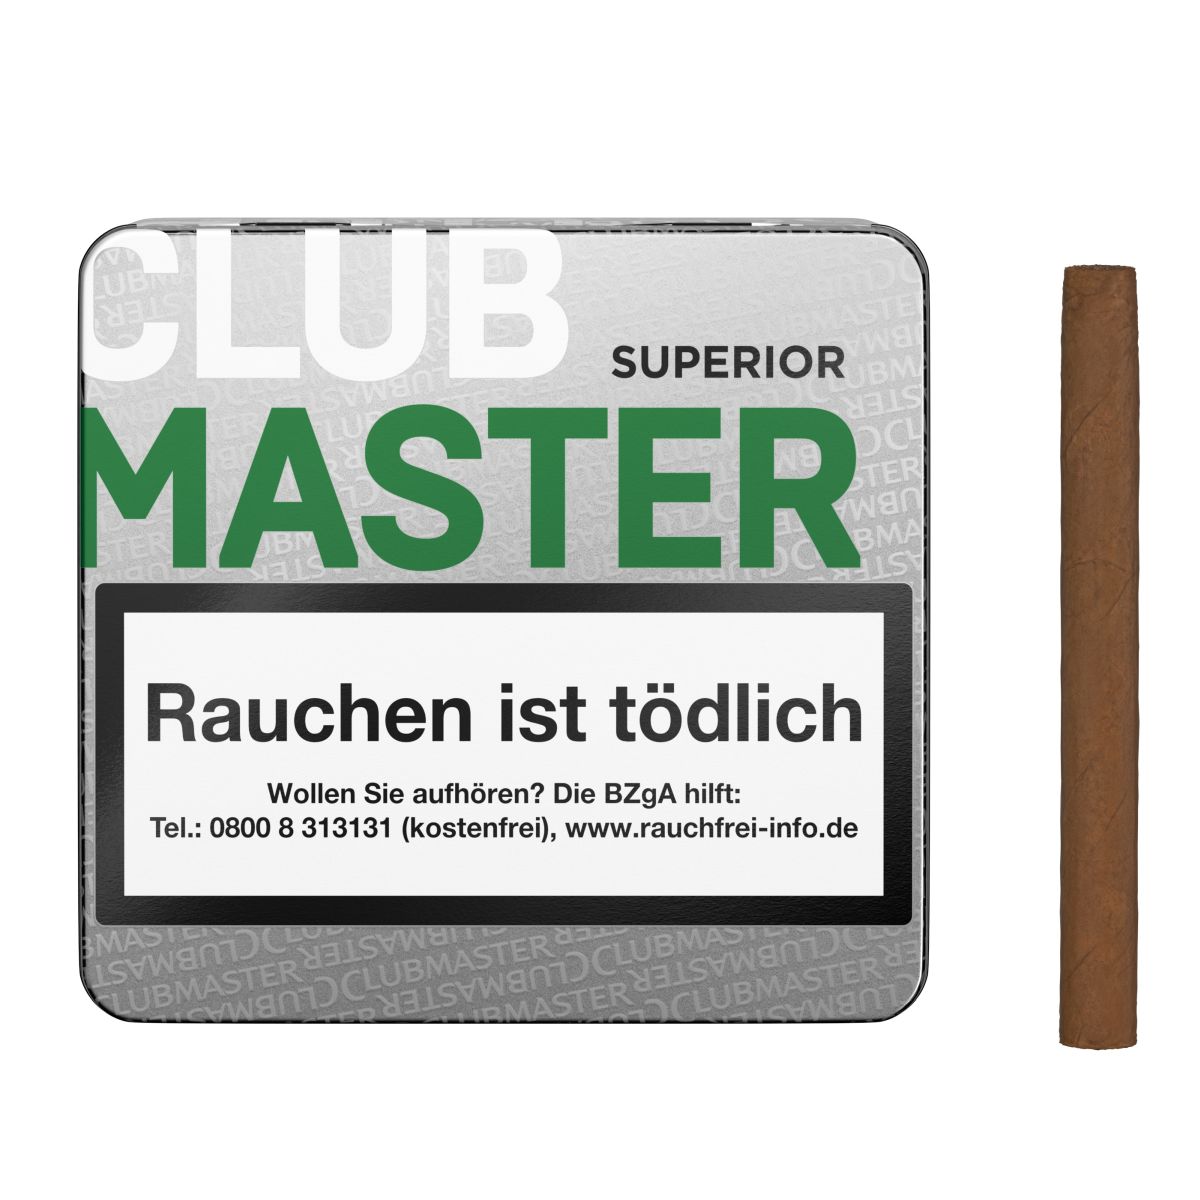 Clubmaster Clubmaster 144 Superior Brazil bei www.Tabakring.de kaufen